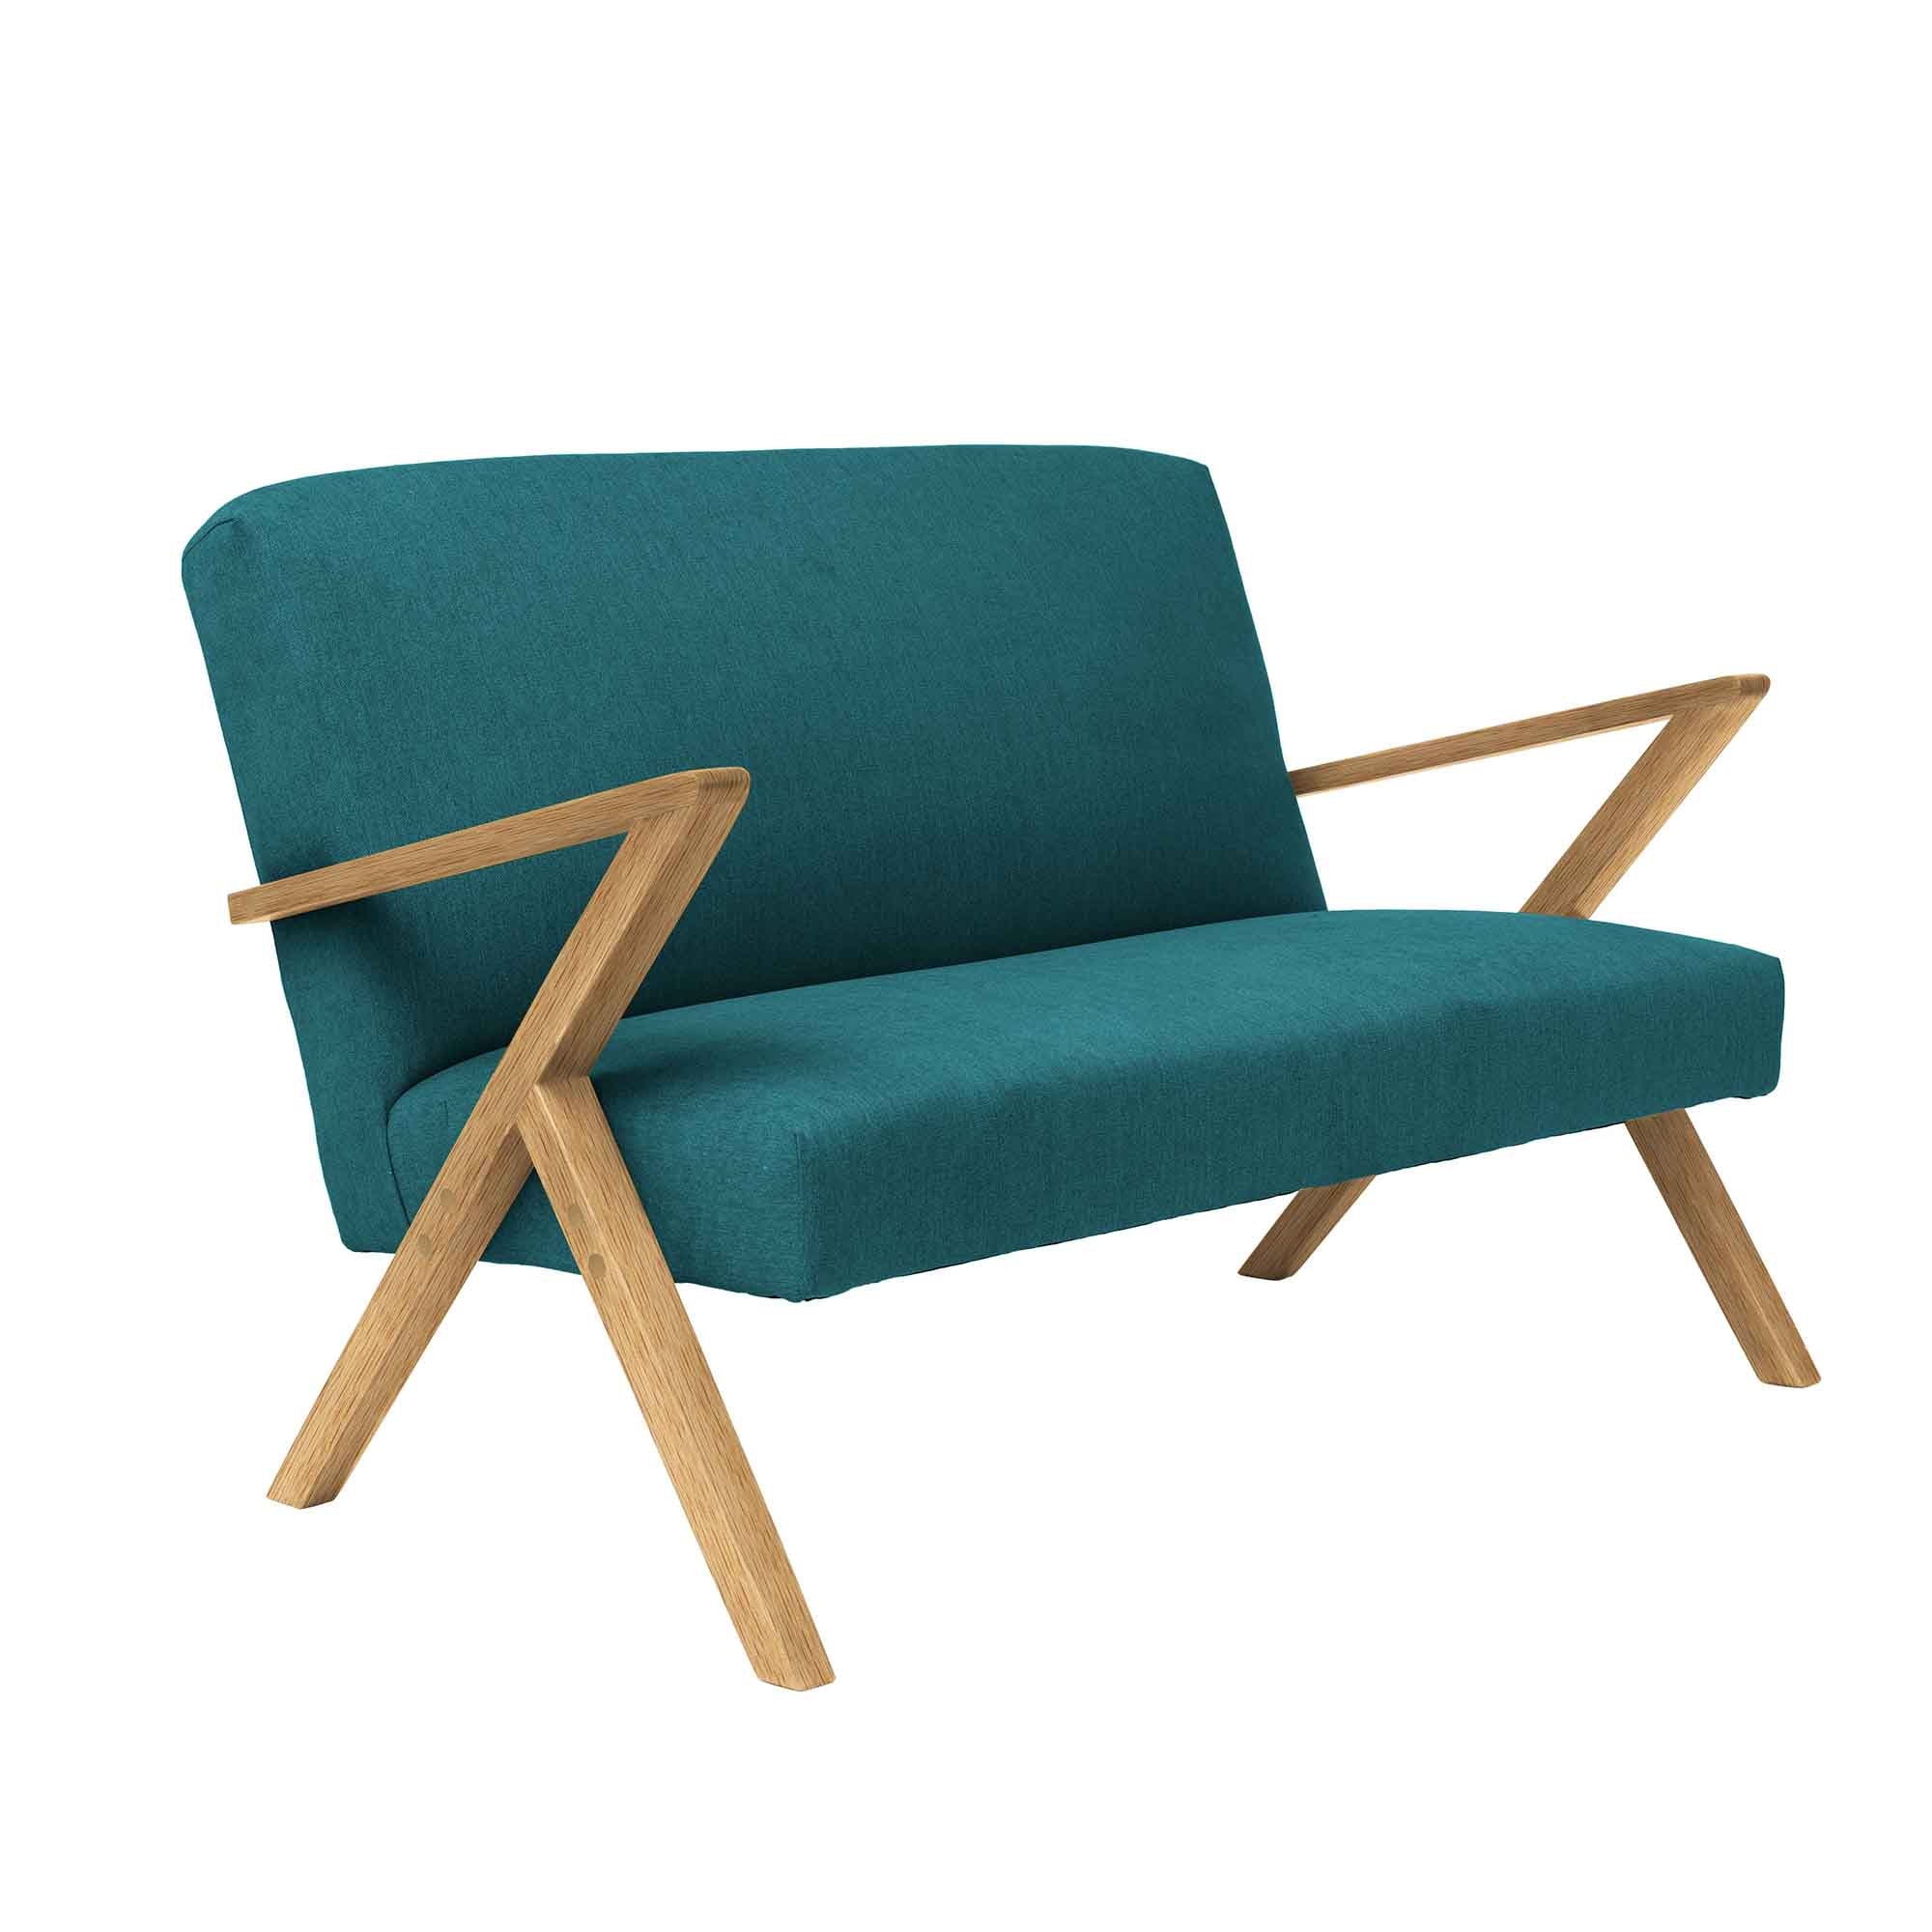  2-Seater Sofa, Oak Wood Frame, Natural Colour blue fabric, half-side view